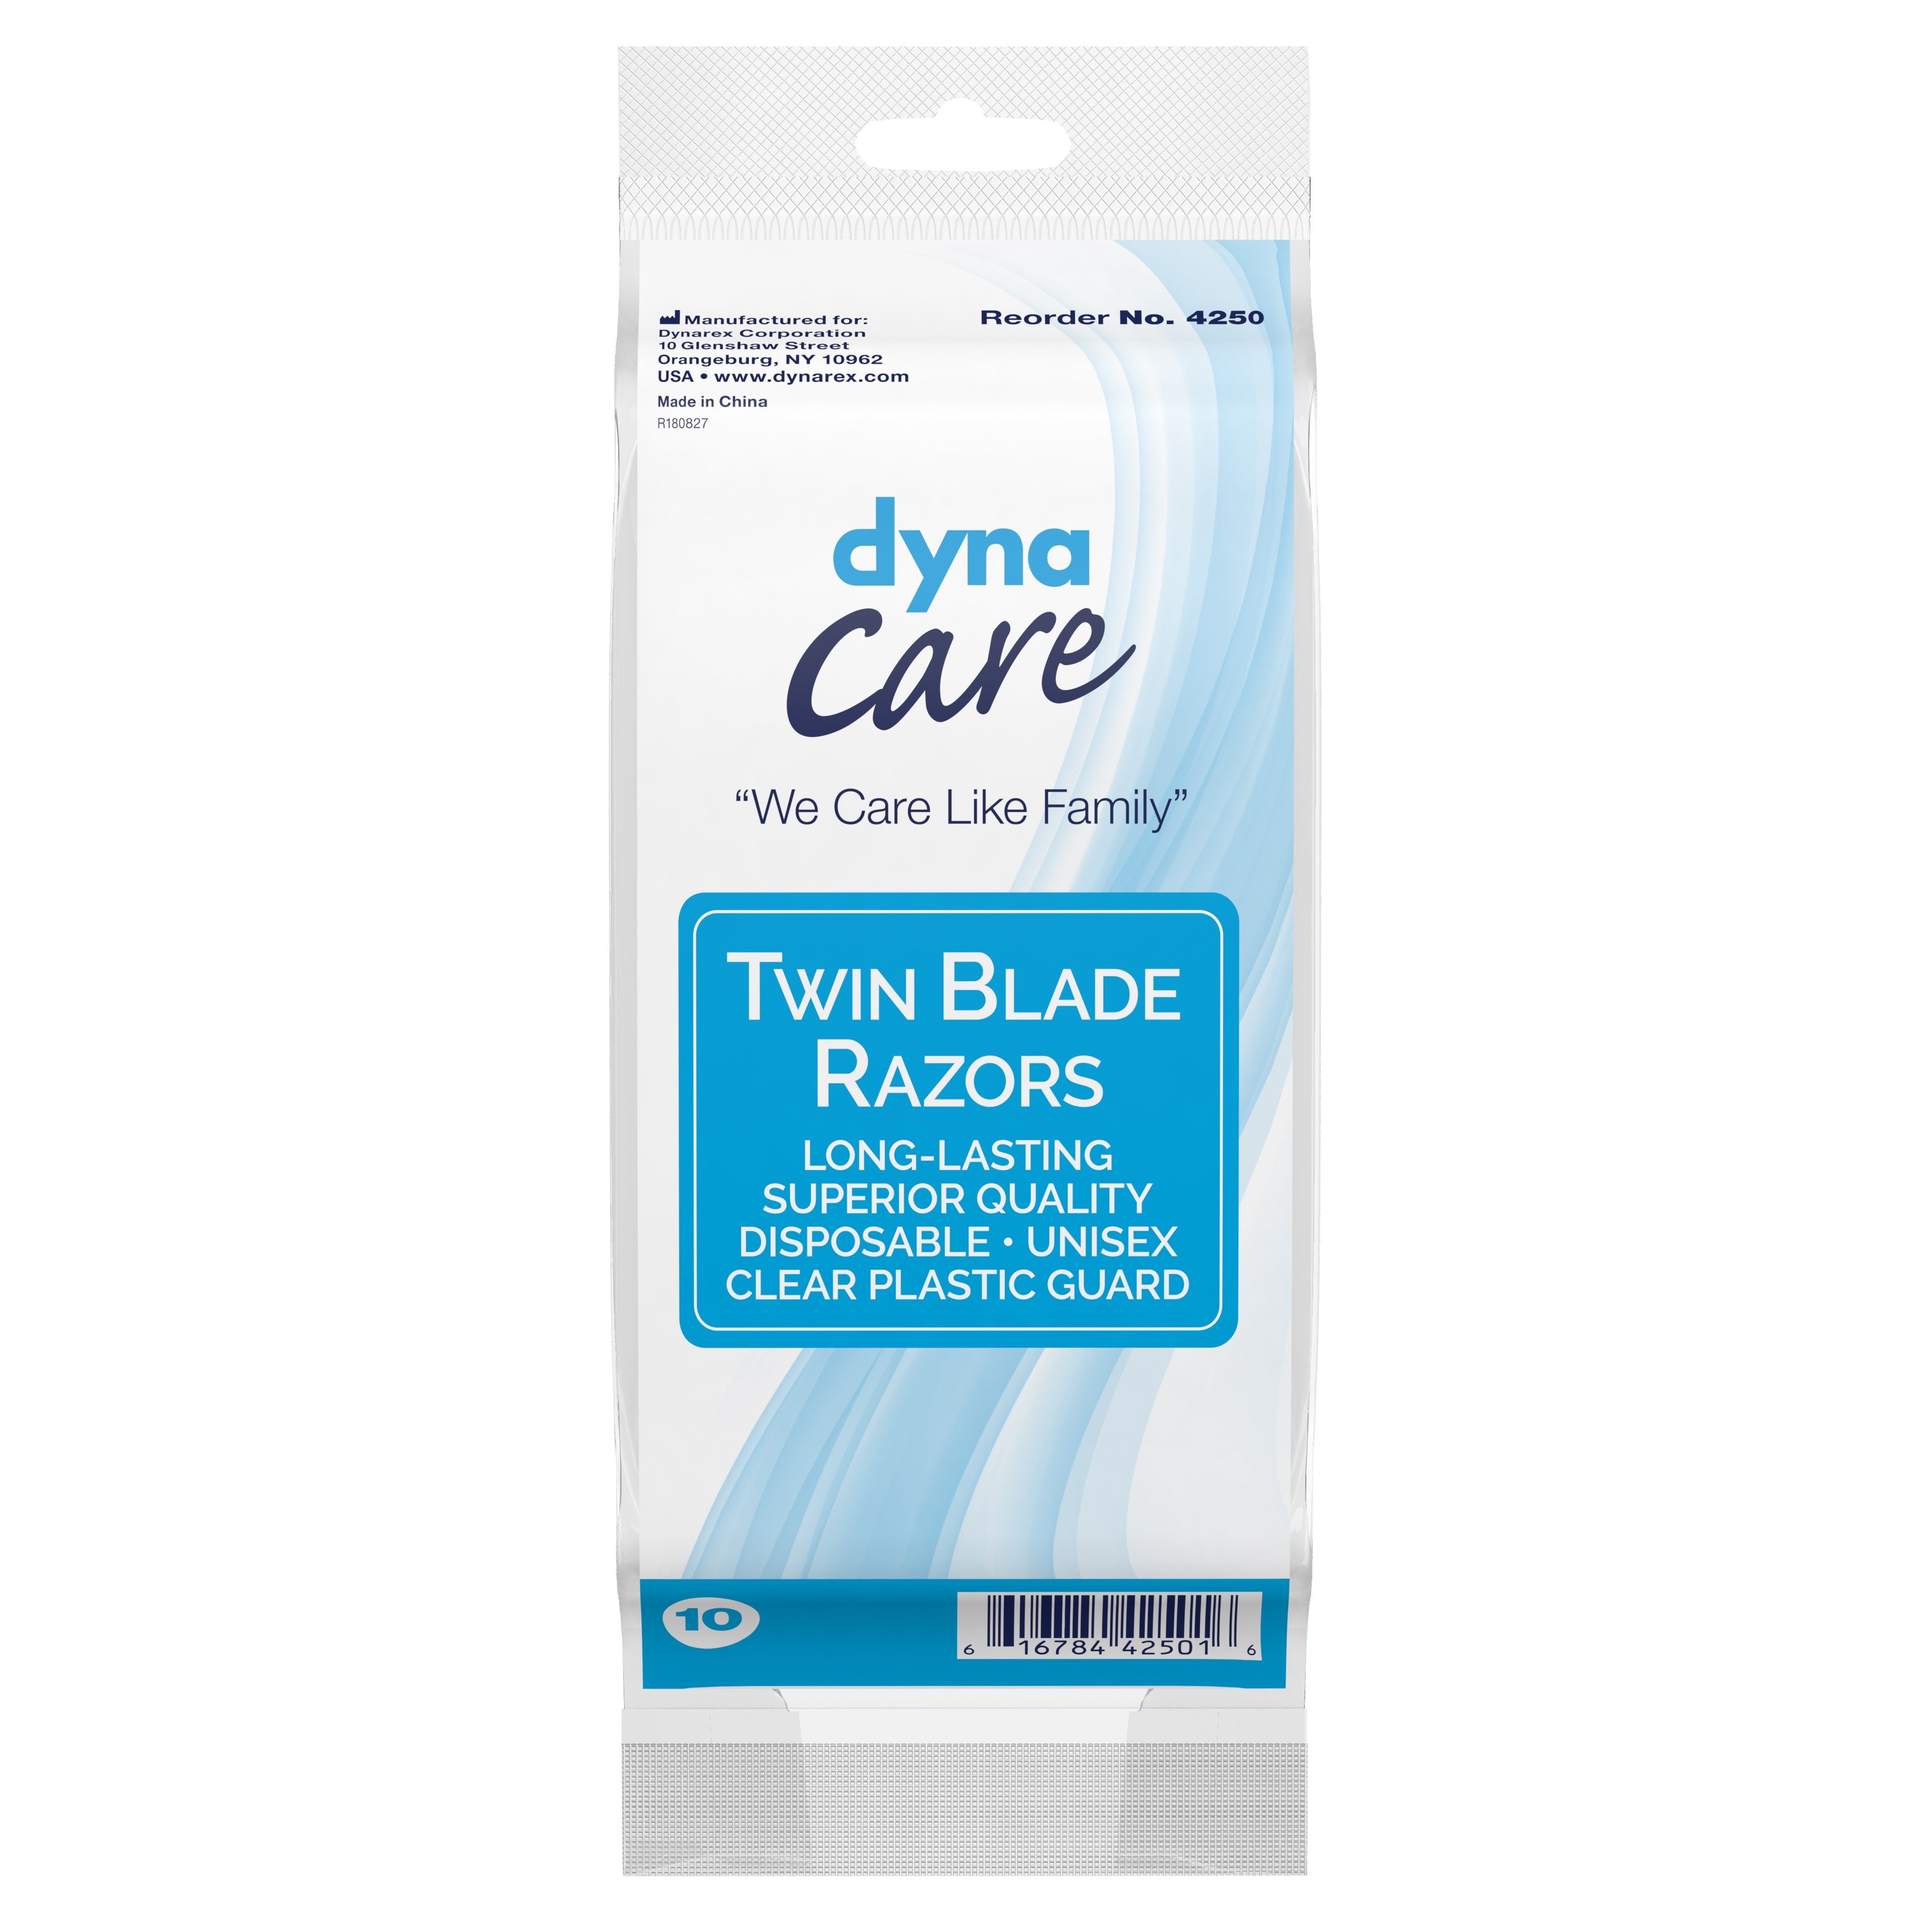 Razor dyna Care Twin Blade Disposable